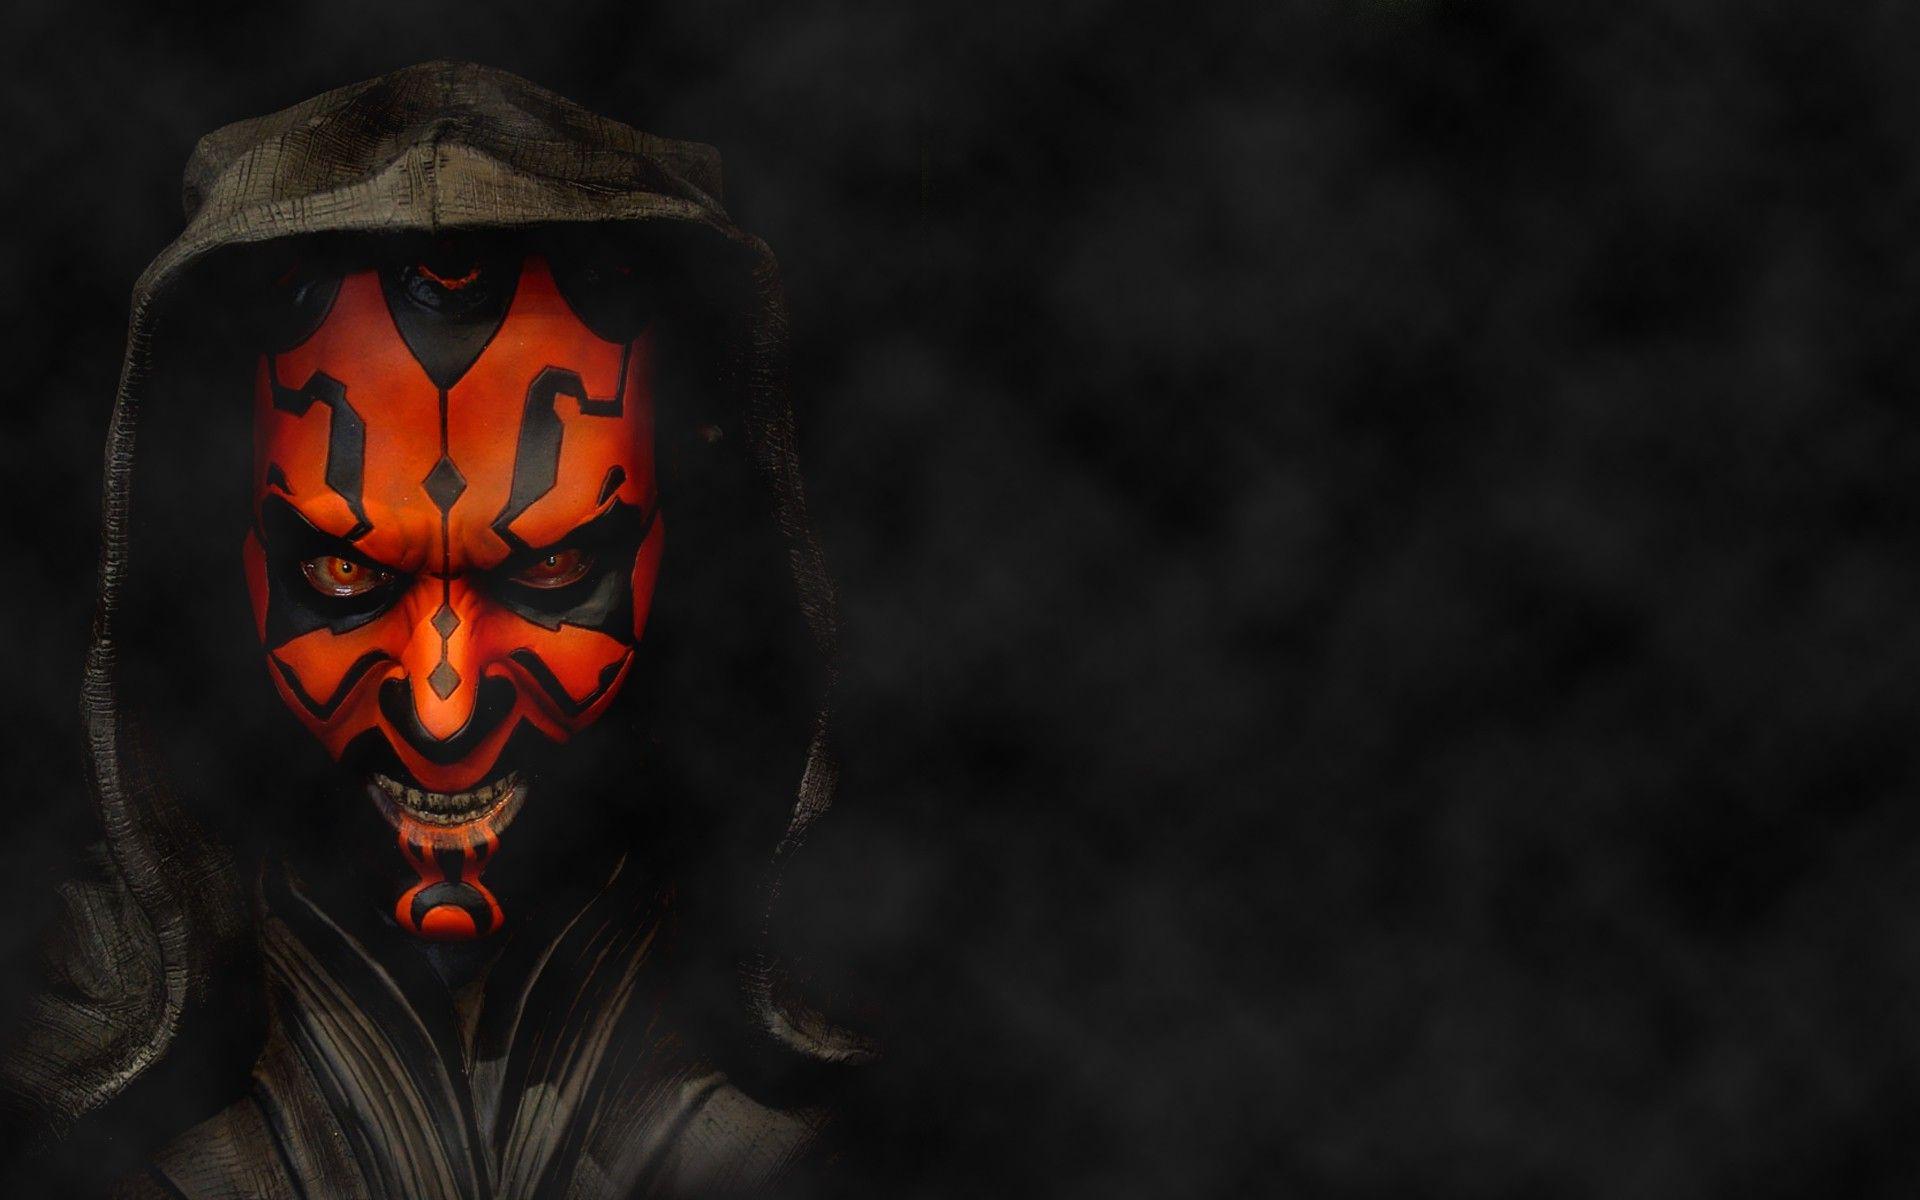 Wallpaper Star Wars Darth Vader Darth Maul Stormtrooper Magenta  Background  Download Free Image